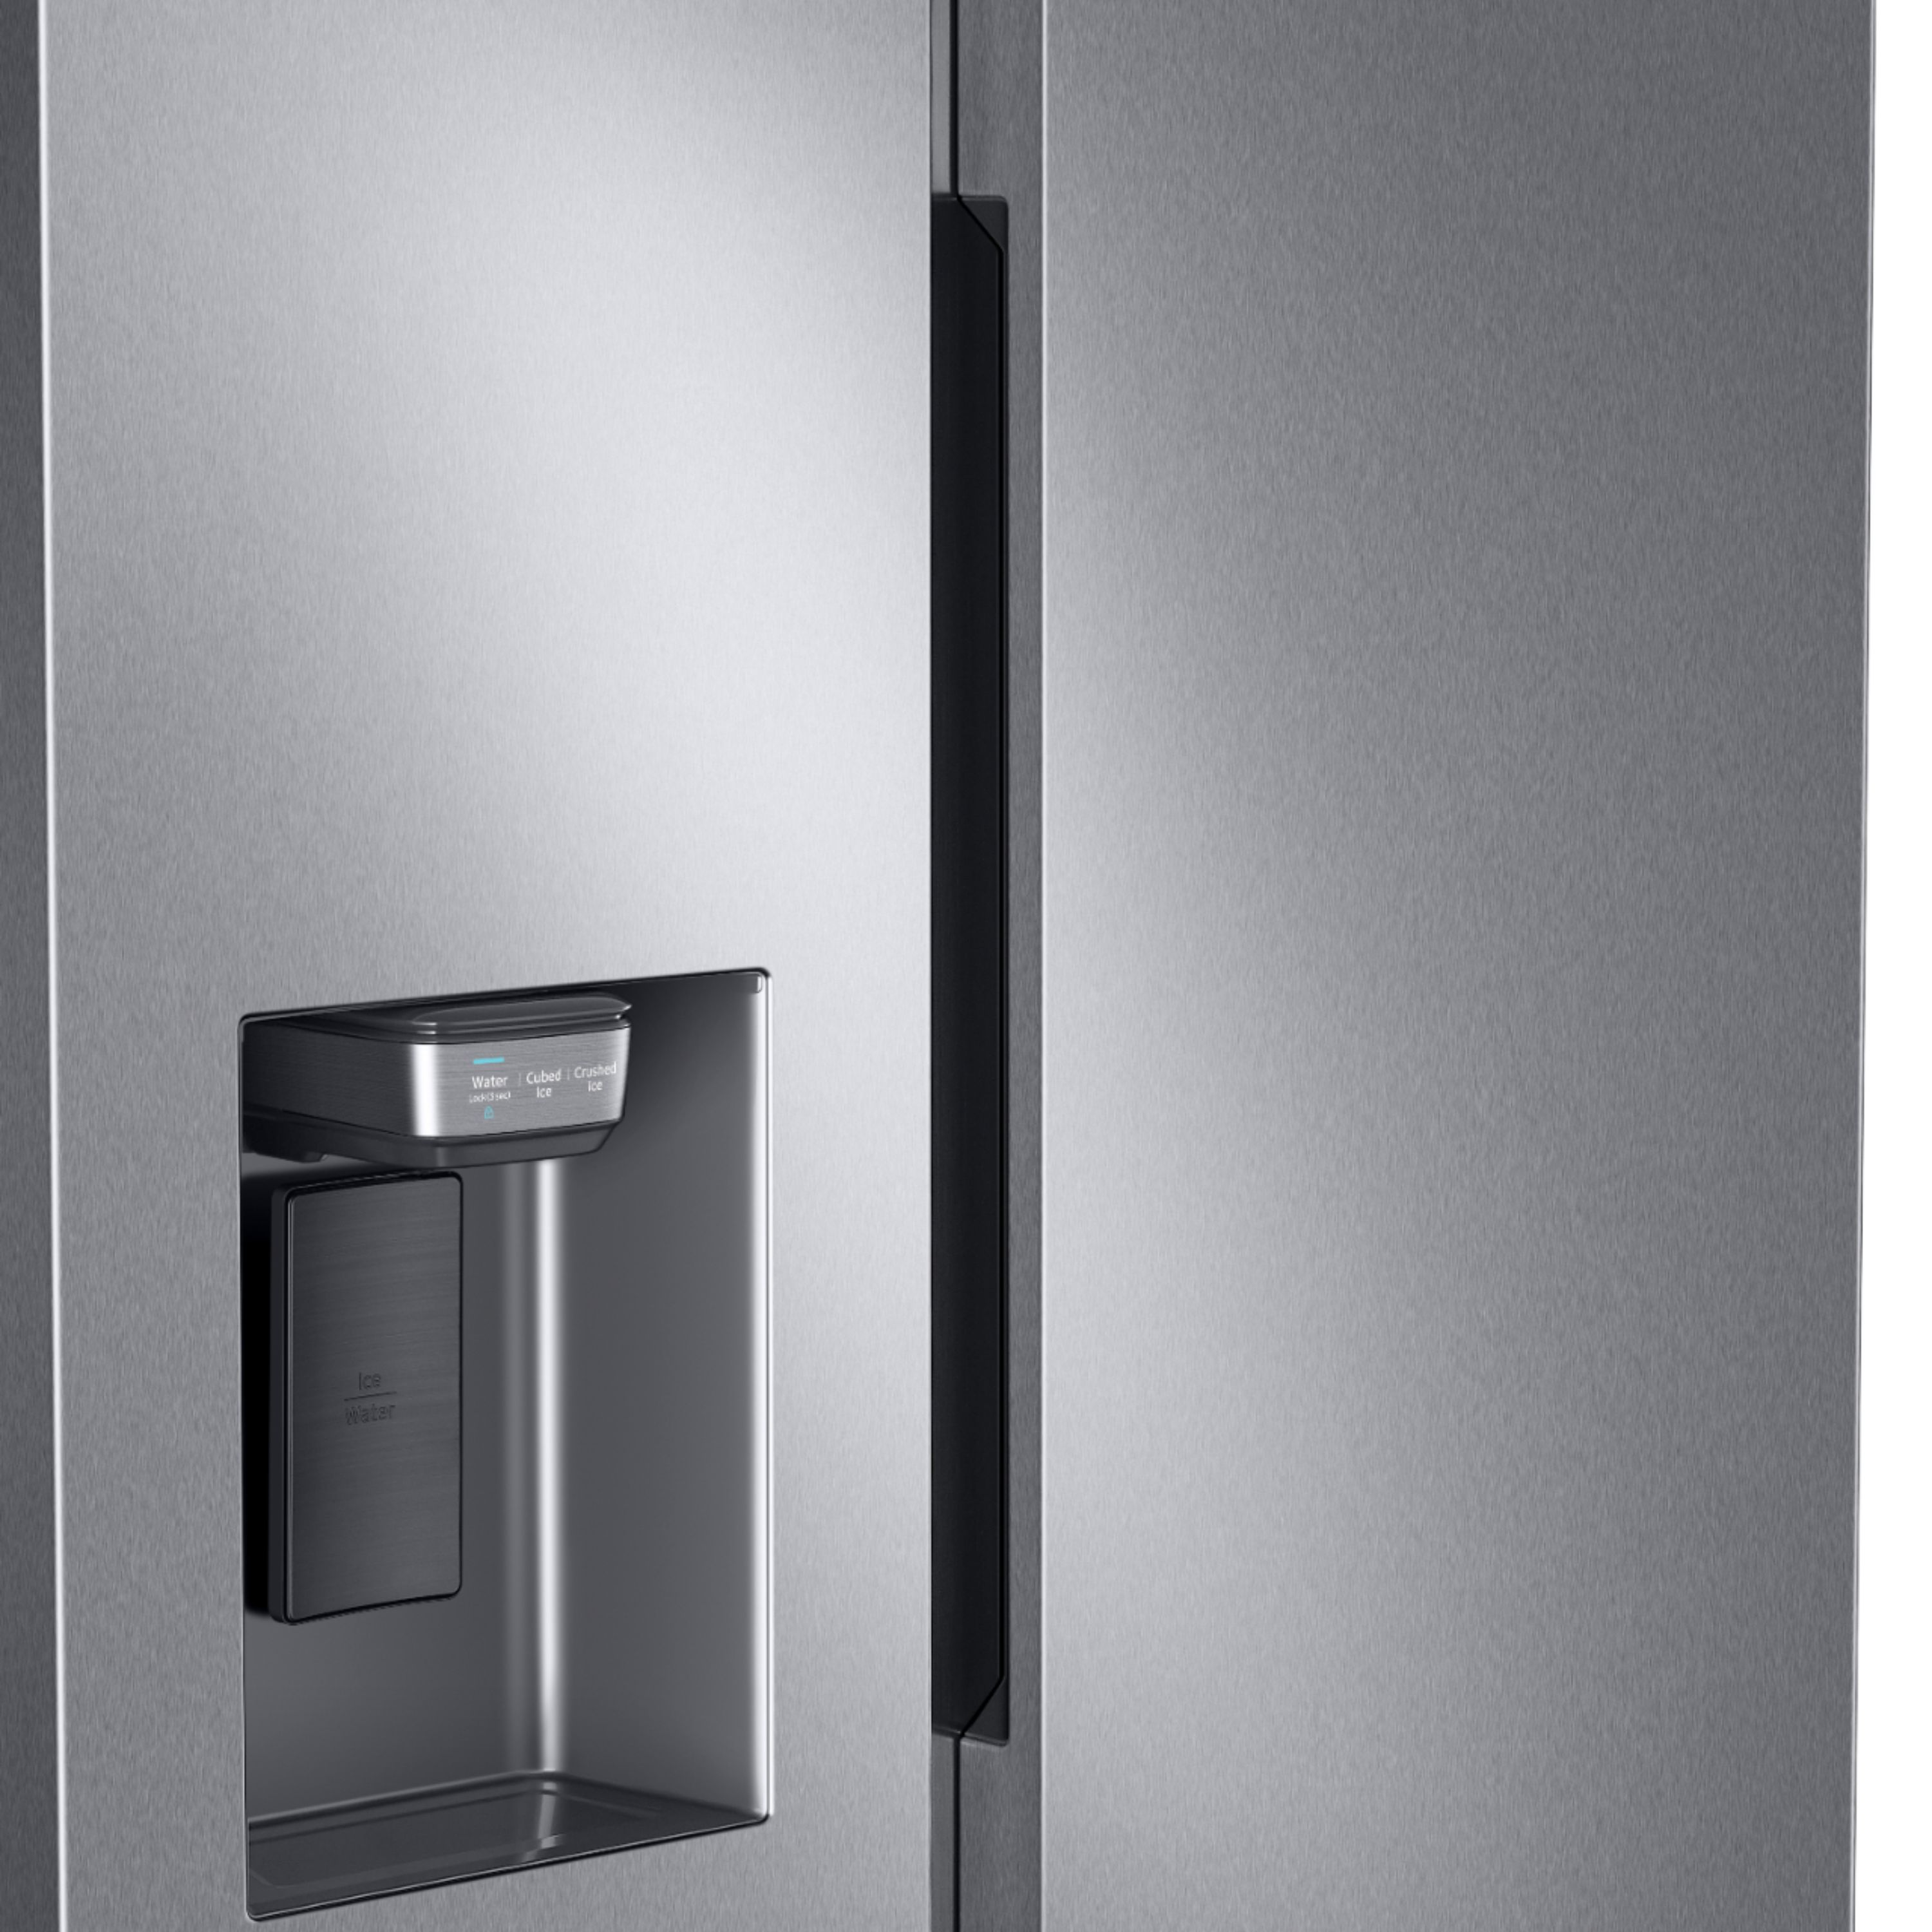 Samsung 27.4 Cu ft Side by Side Refrigerator - Black Stainless Steel